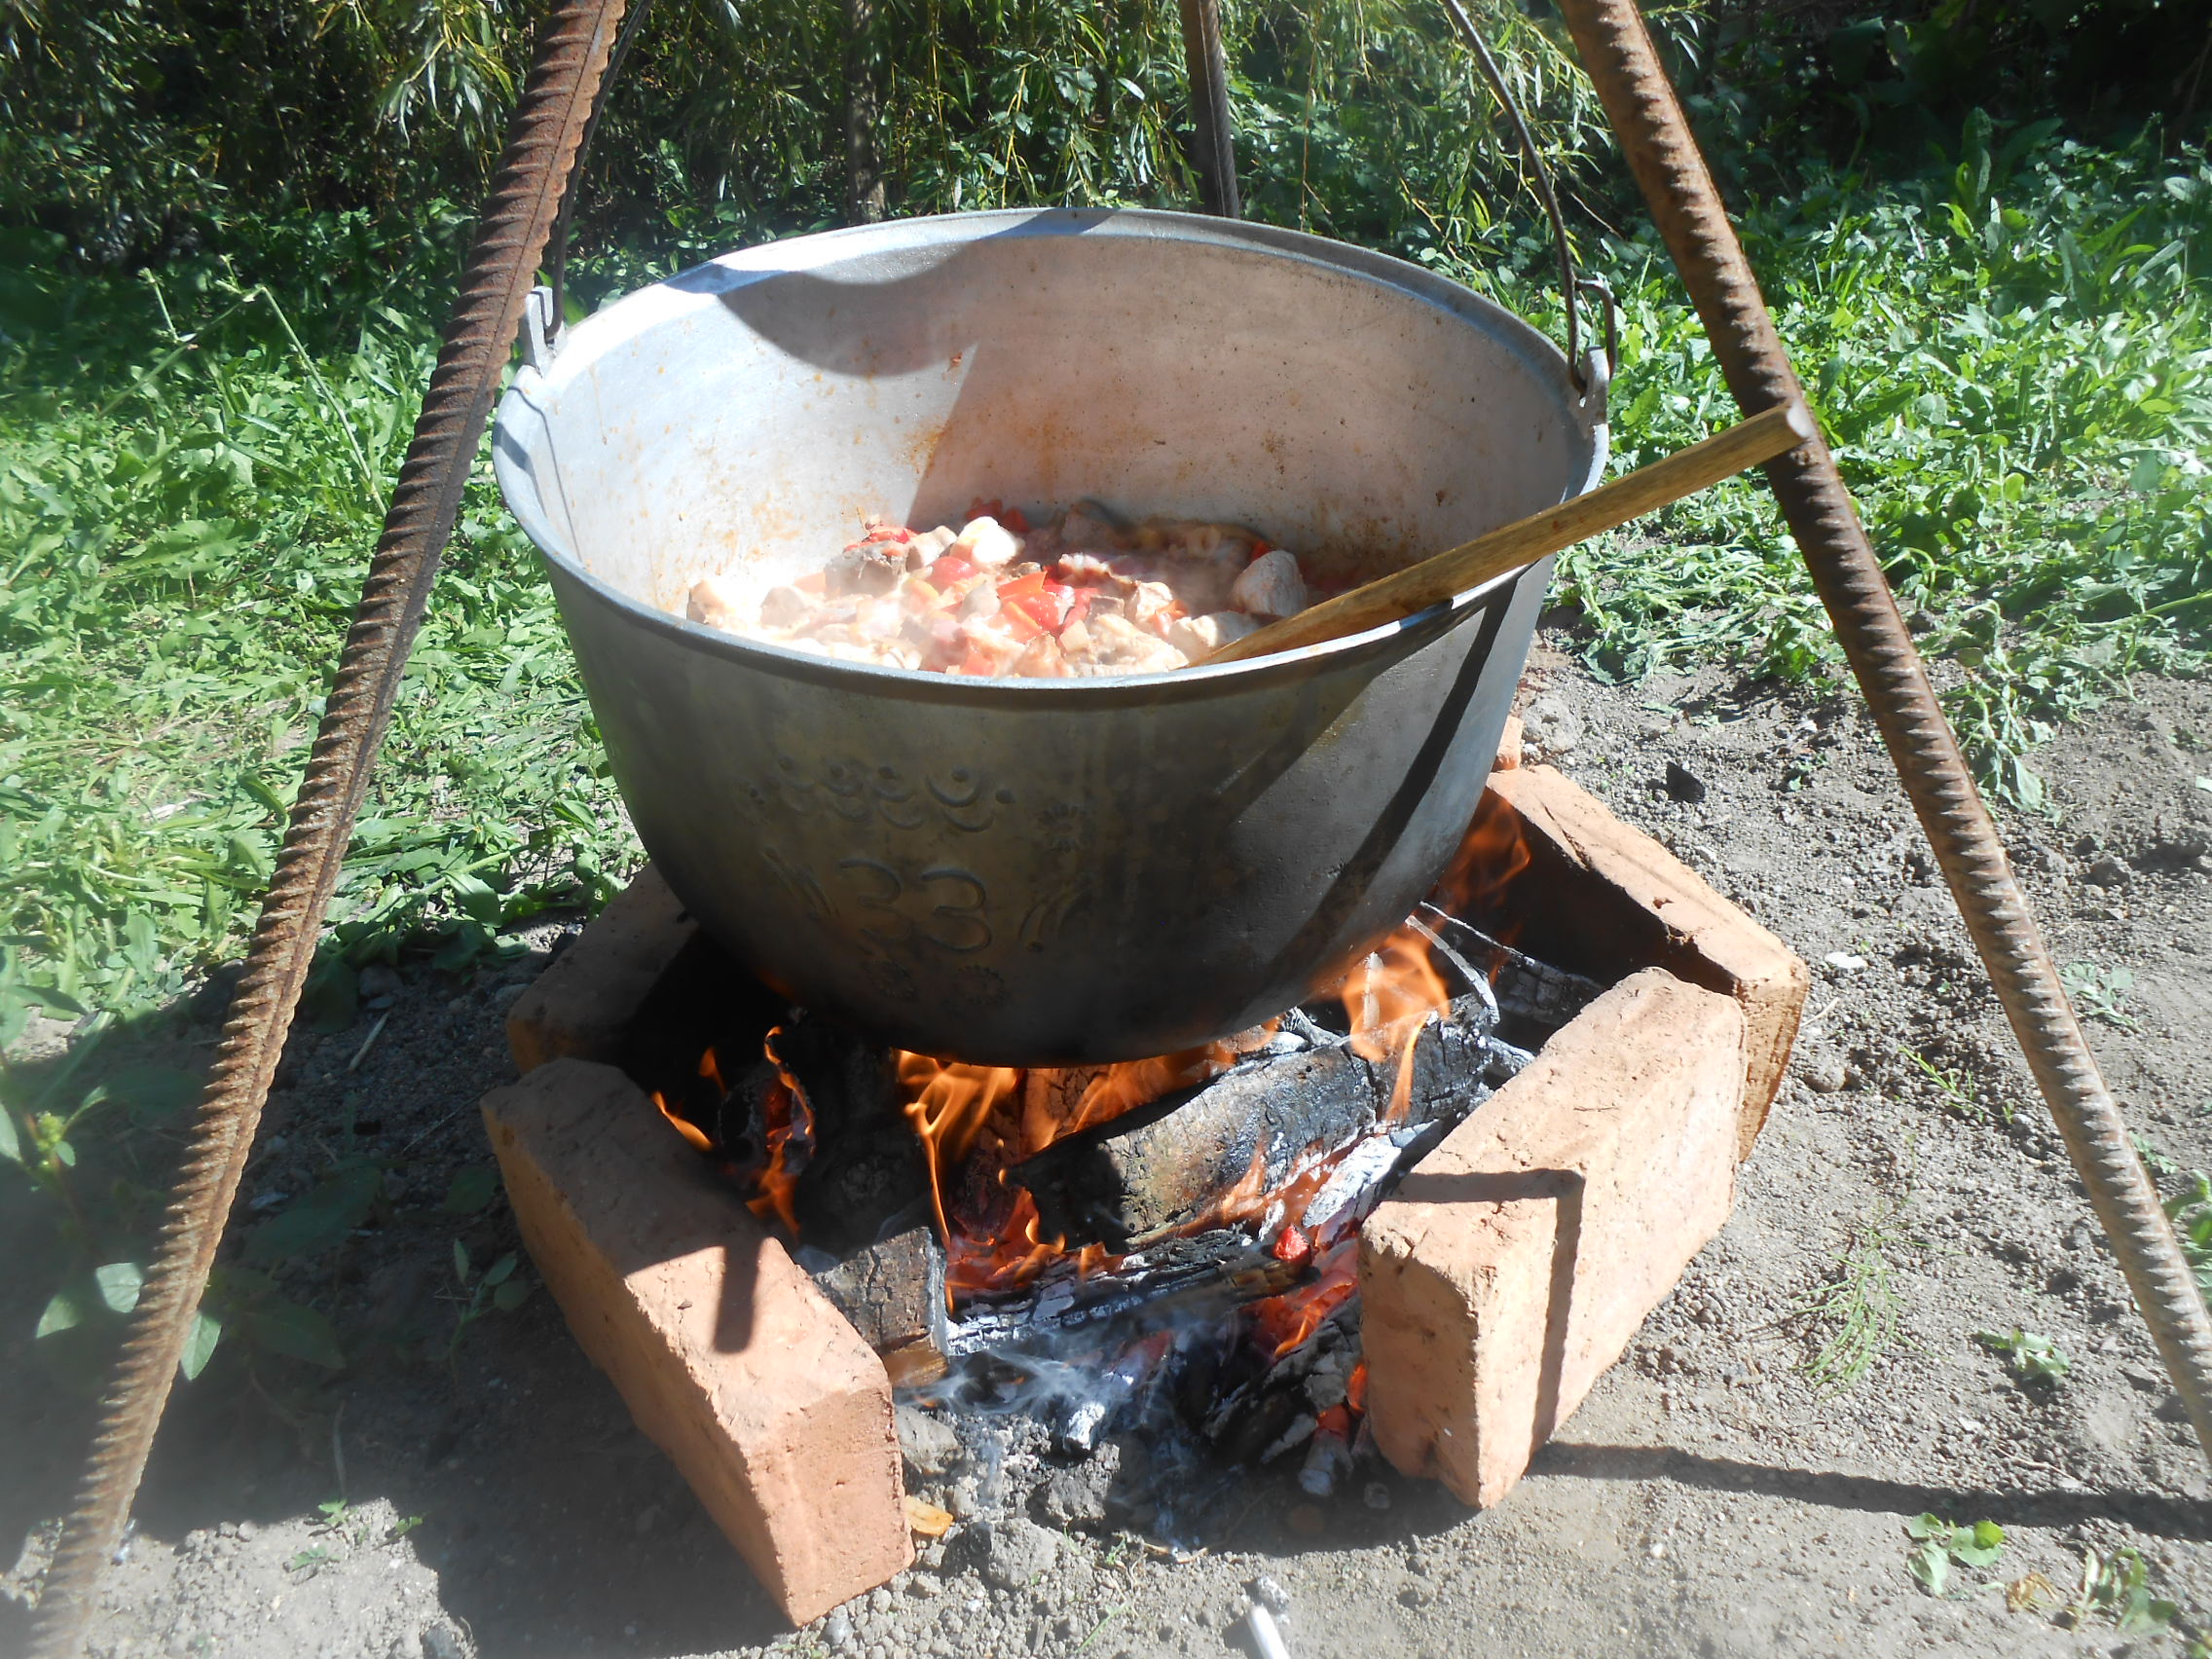 Tocana de porc la ceaun - Reteta savuroasa ideala pentru gurmanzi